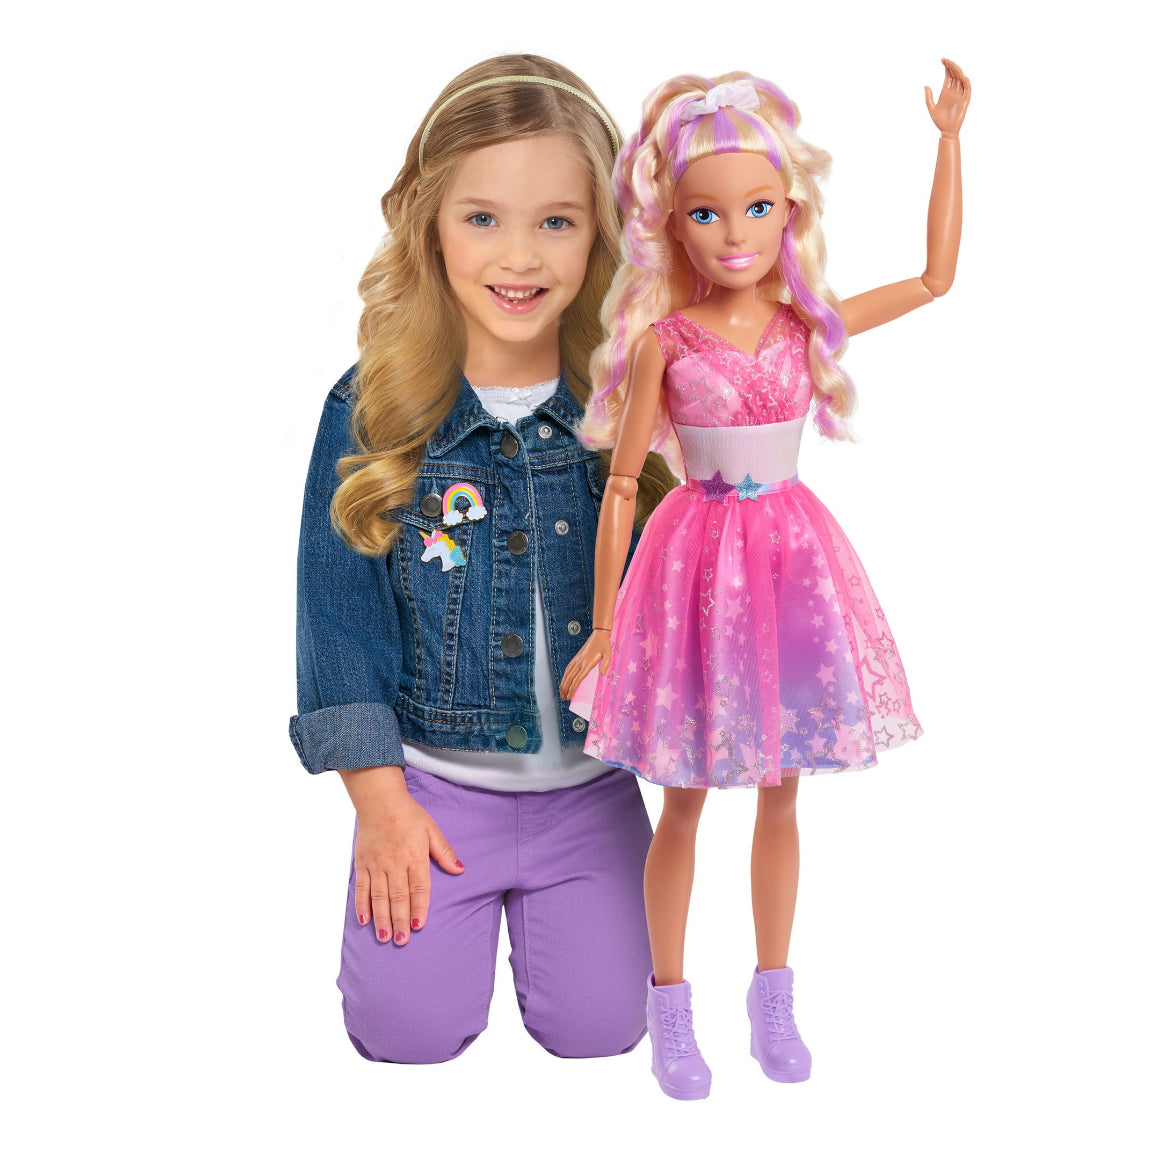 Barbie 28 inch Best Fashion Friend Star Power Doll, Blonde Hair